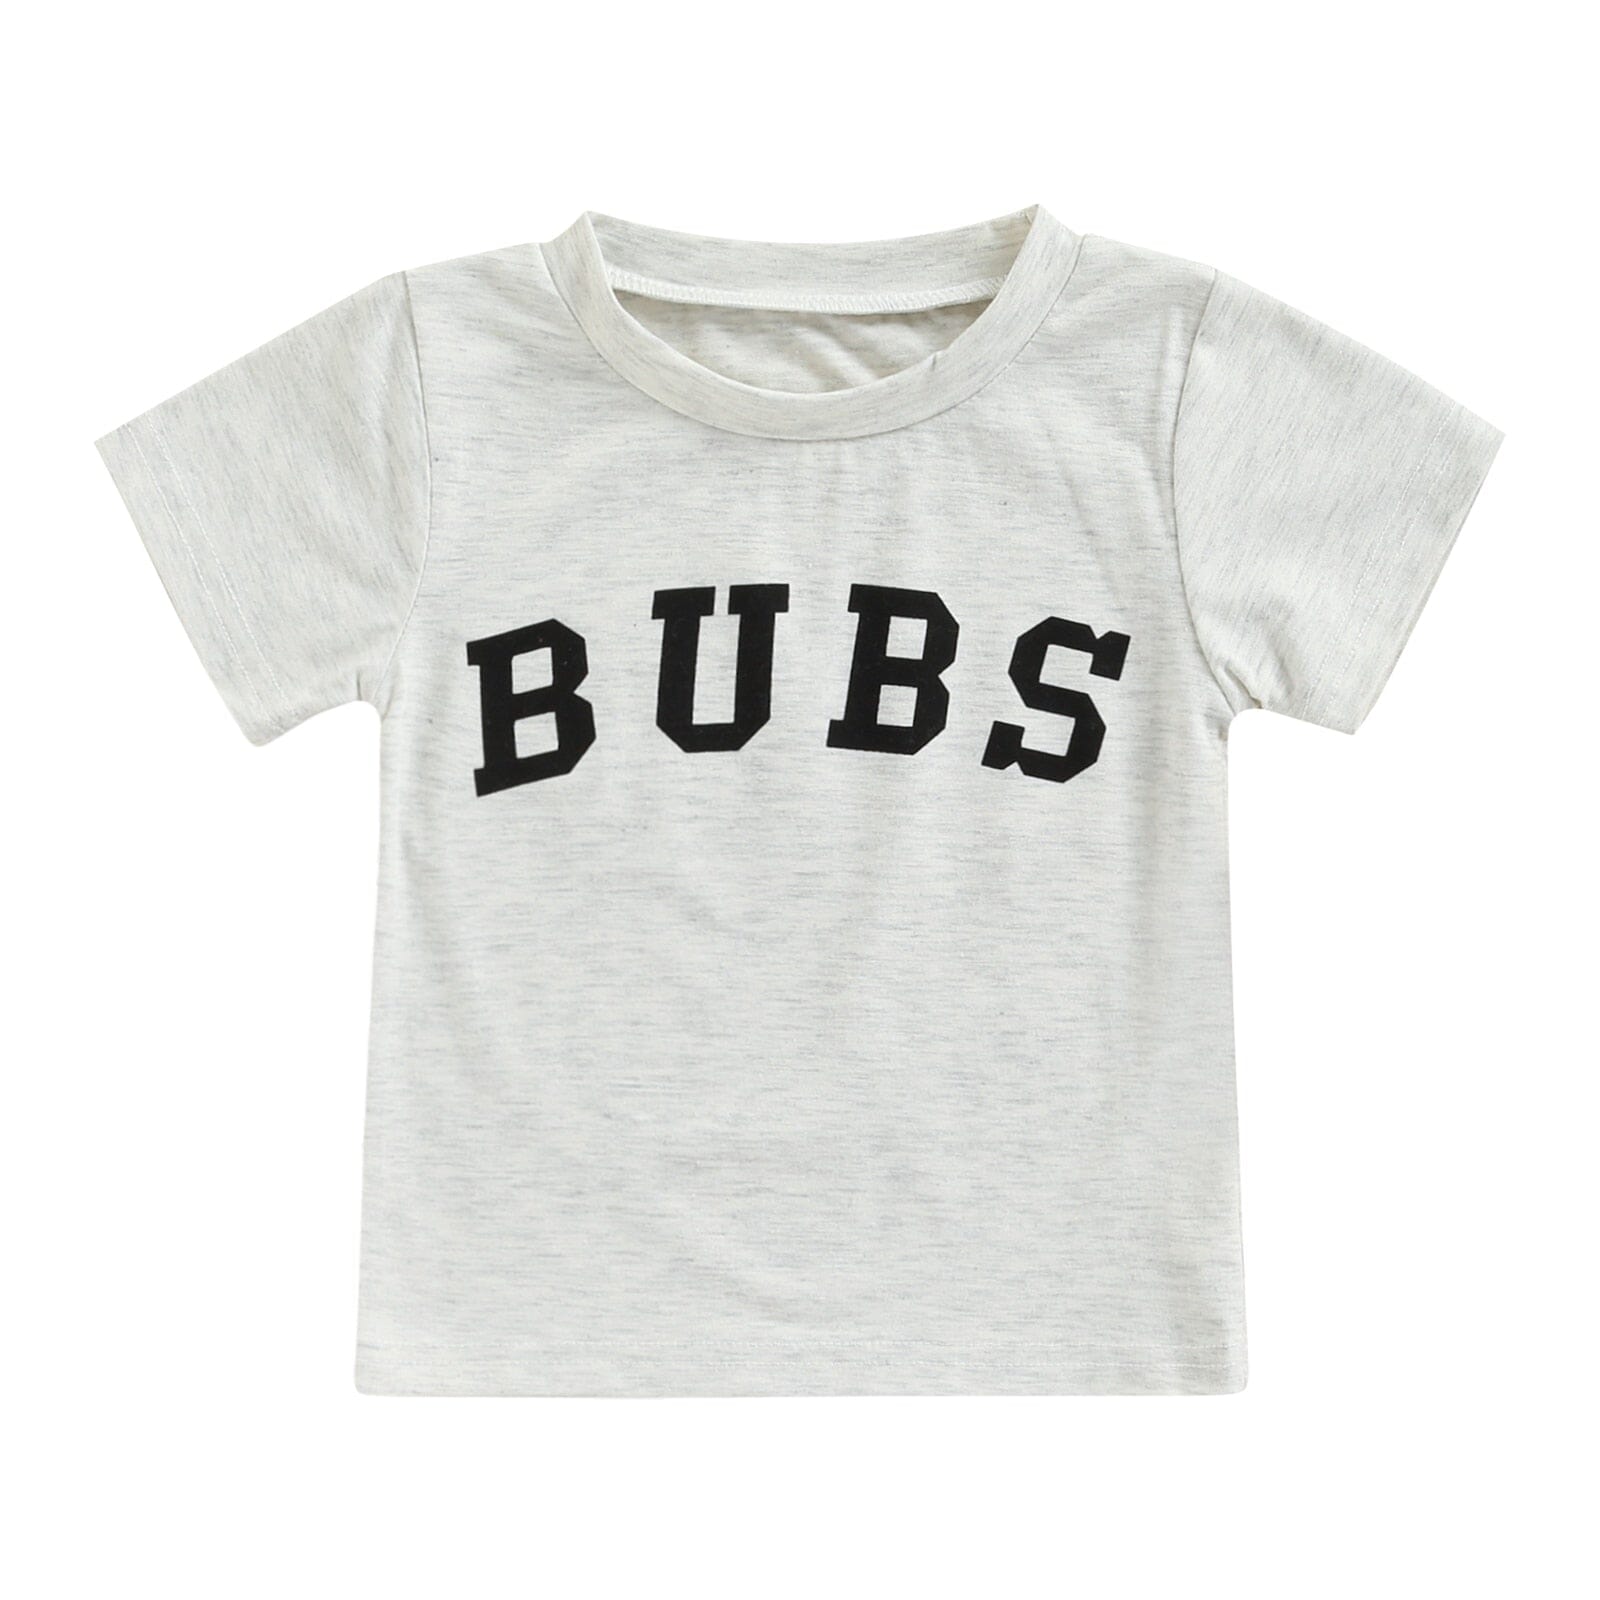 Camiseta Infantil Bubs Loja Click Certo Cinza 1-2 Anos 